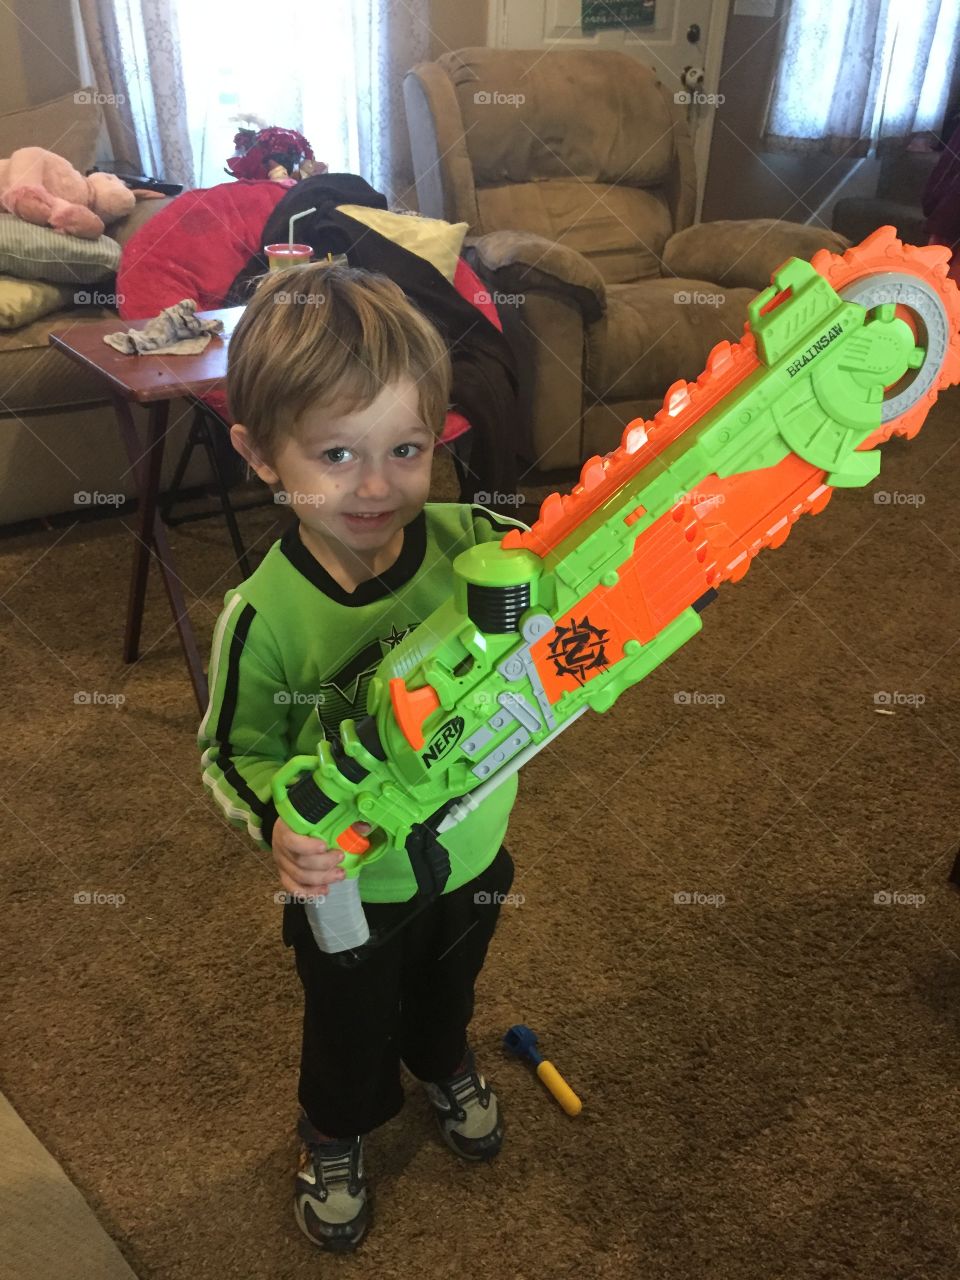 Small boy holding toy gun